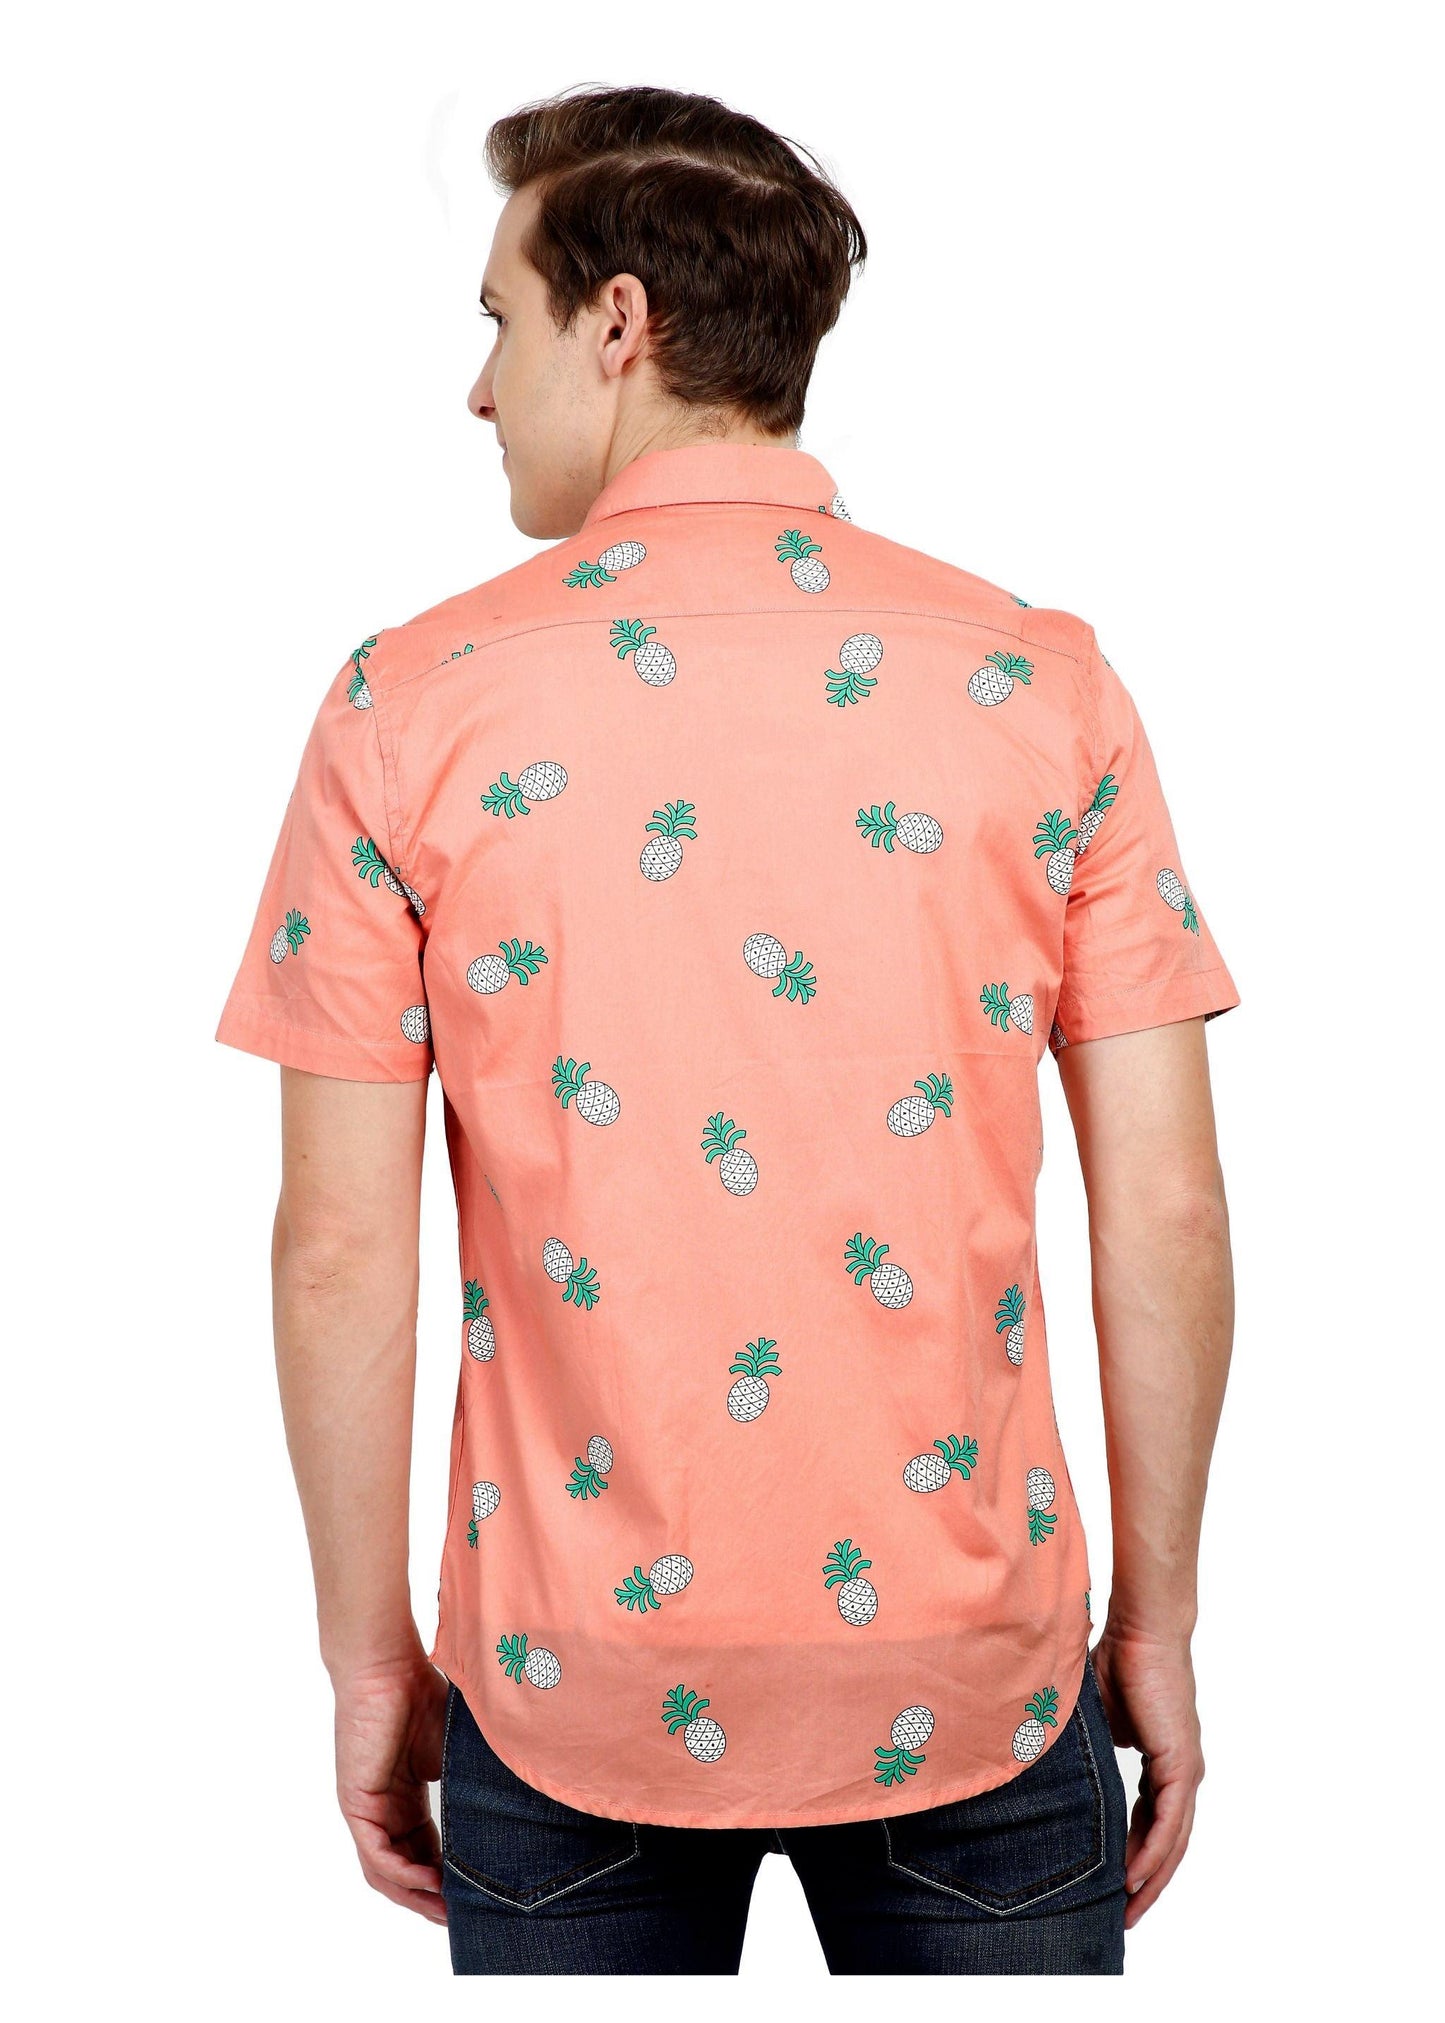 Tusok-pink-pineappleFeatured Shirt, Vacation-Printed Shirtimage-Peach Pineapple (3)